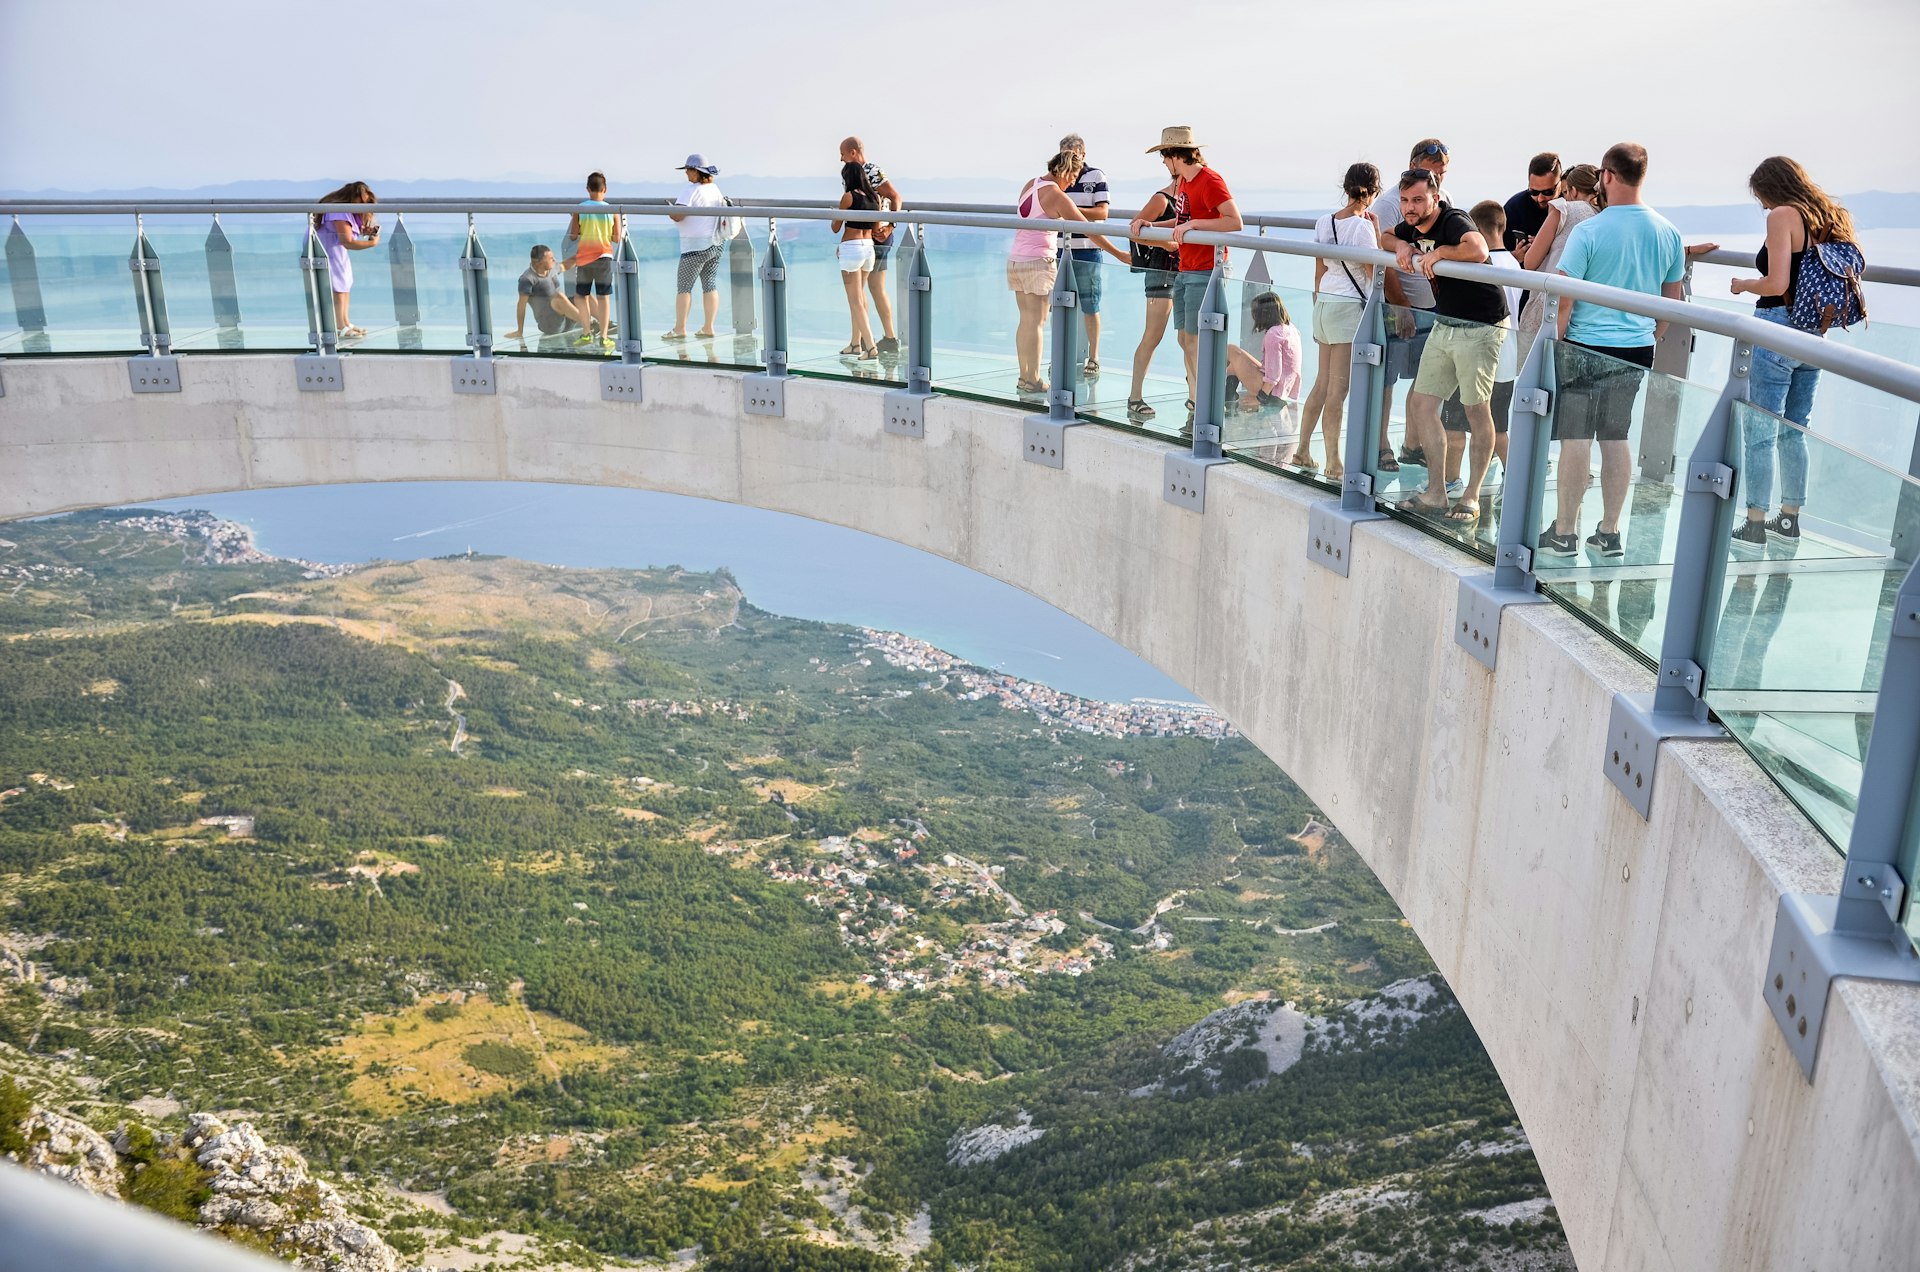 Tourists enjoy views from the Skywalk Biokovo glass observation bridge over mountains and Adriatic Sea, Makarska, Croatia